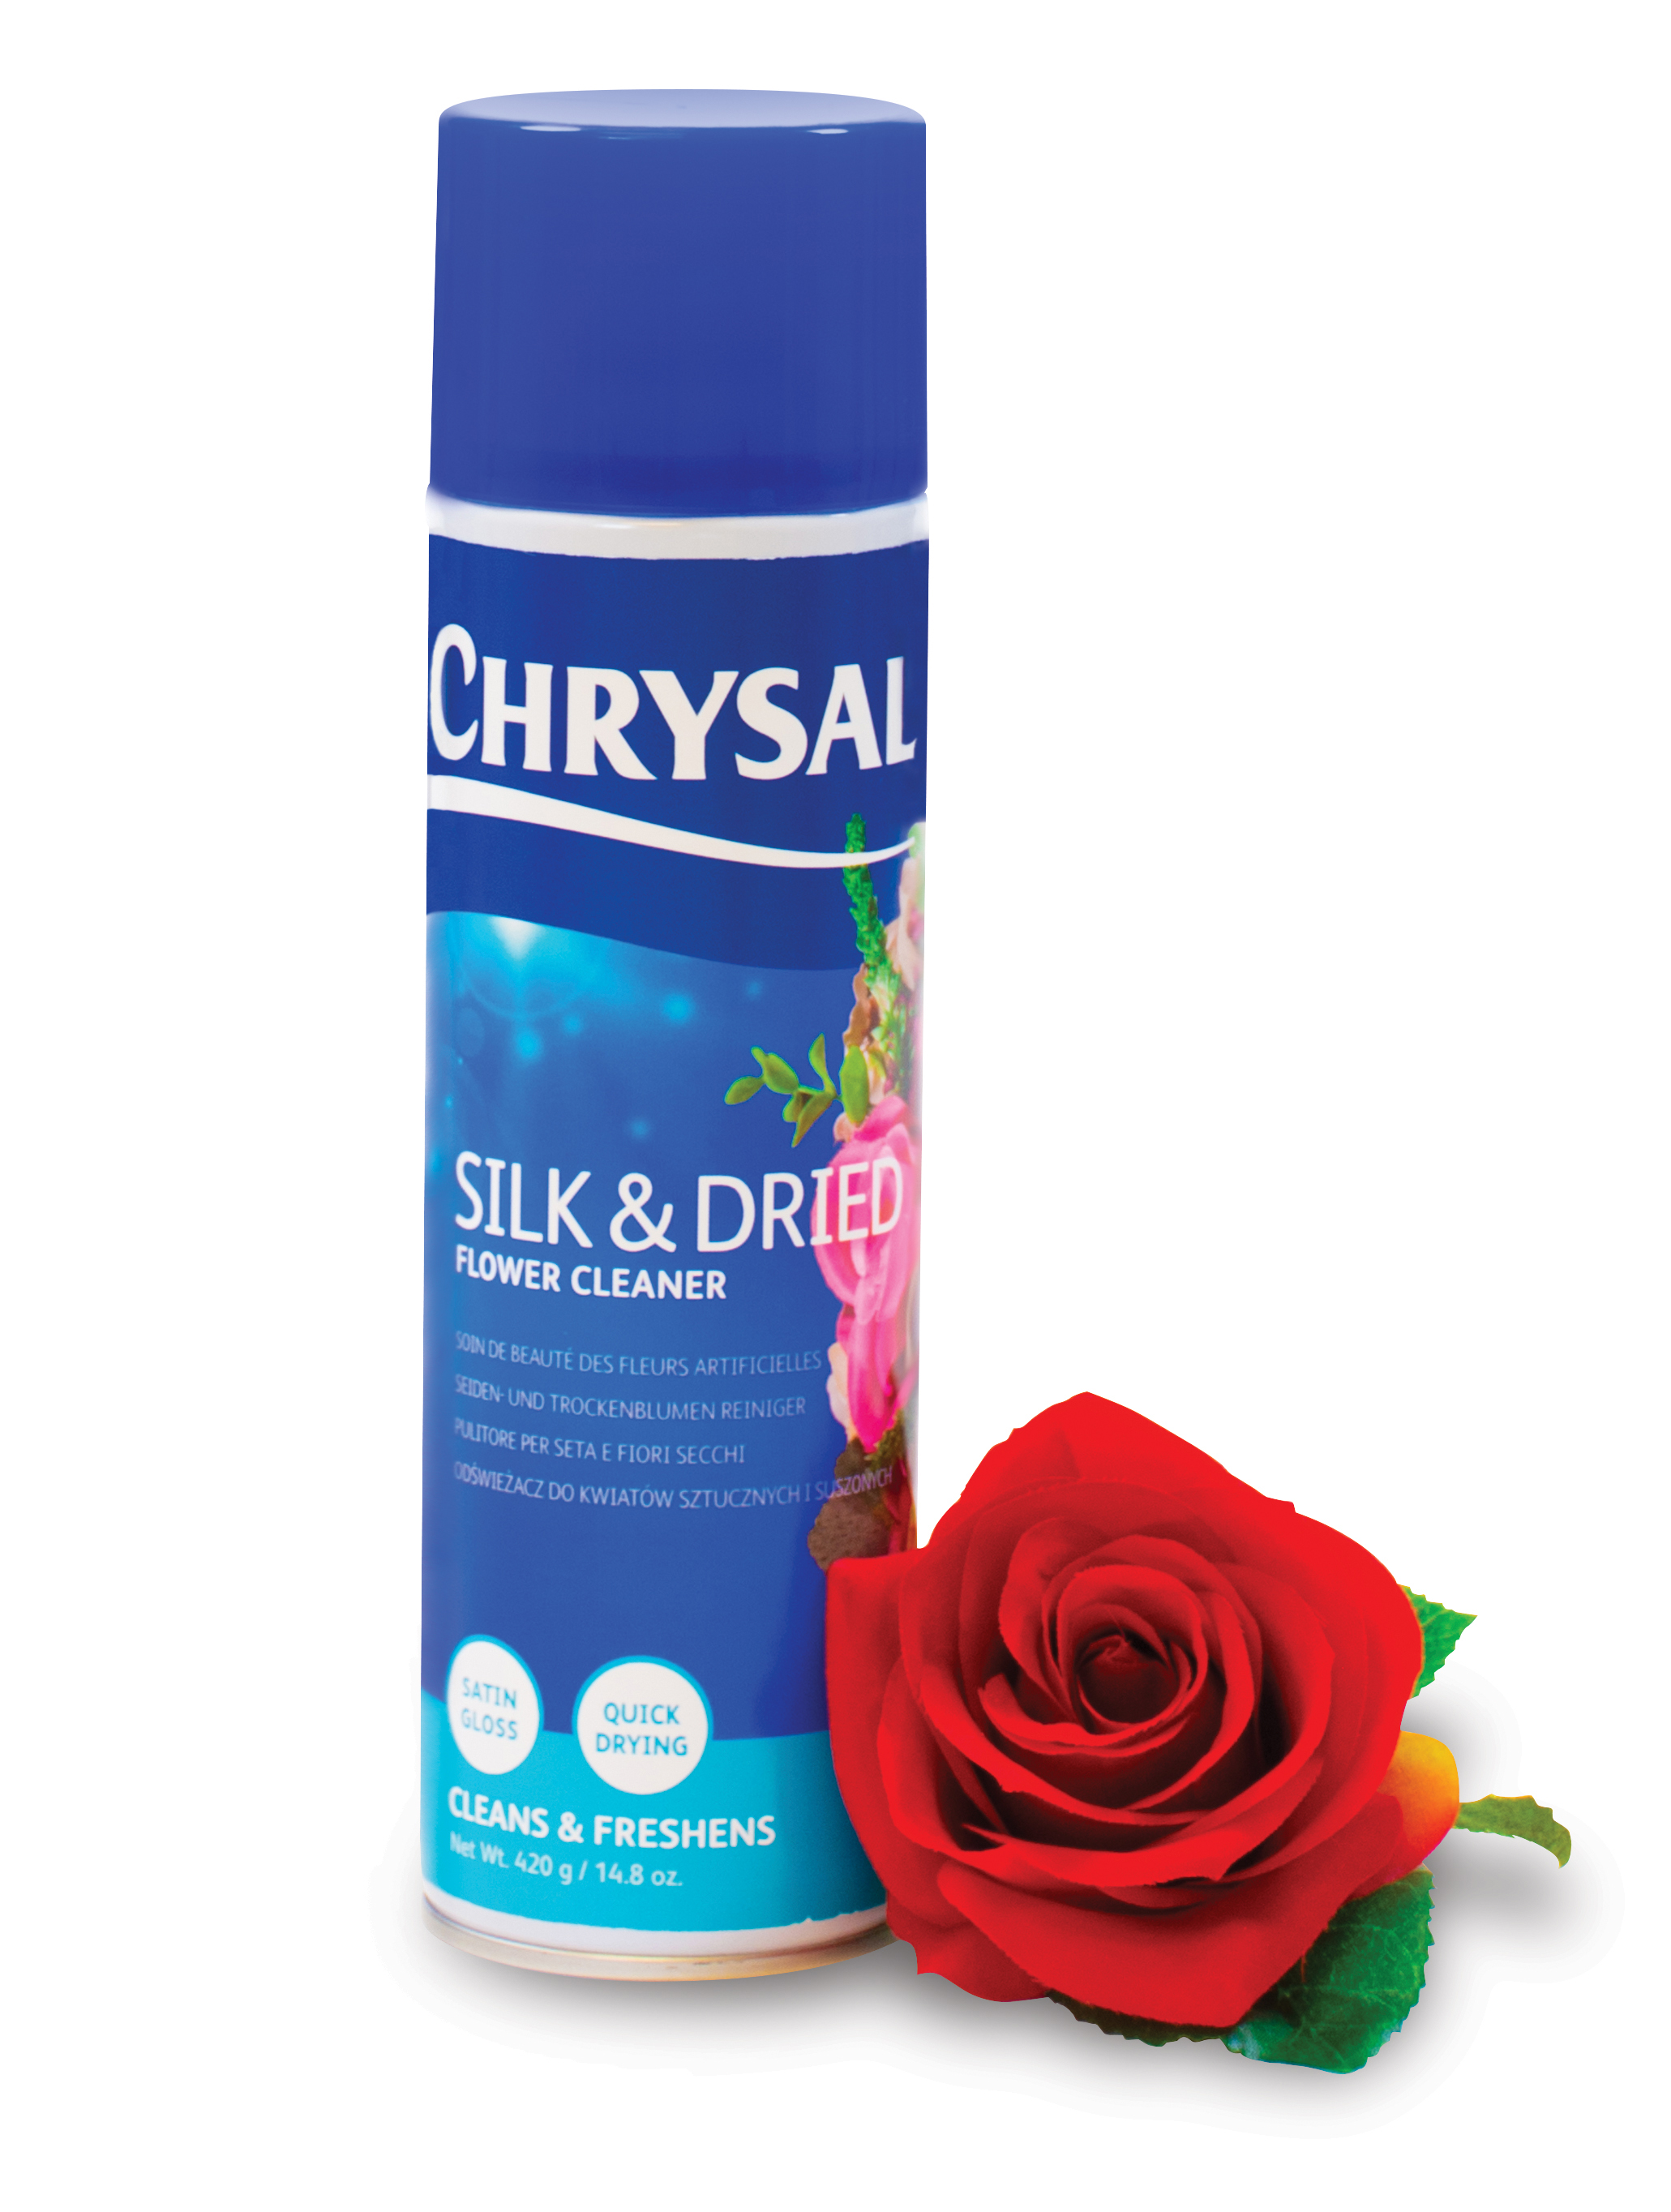 37 Best Silk Flower Cleaner ideas  silk flowers, cleaners, silk plants